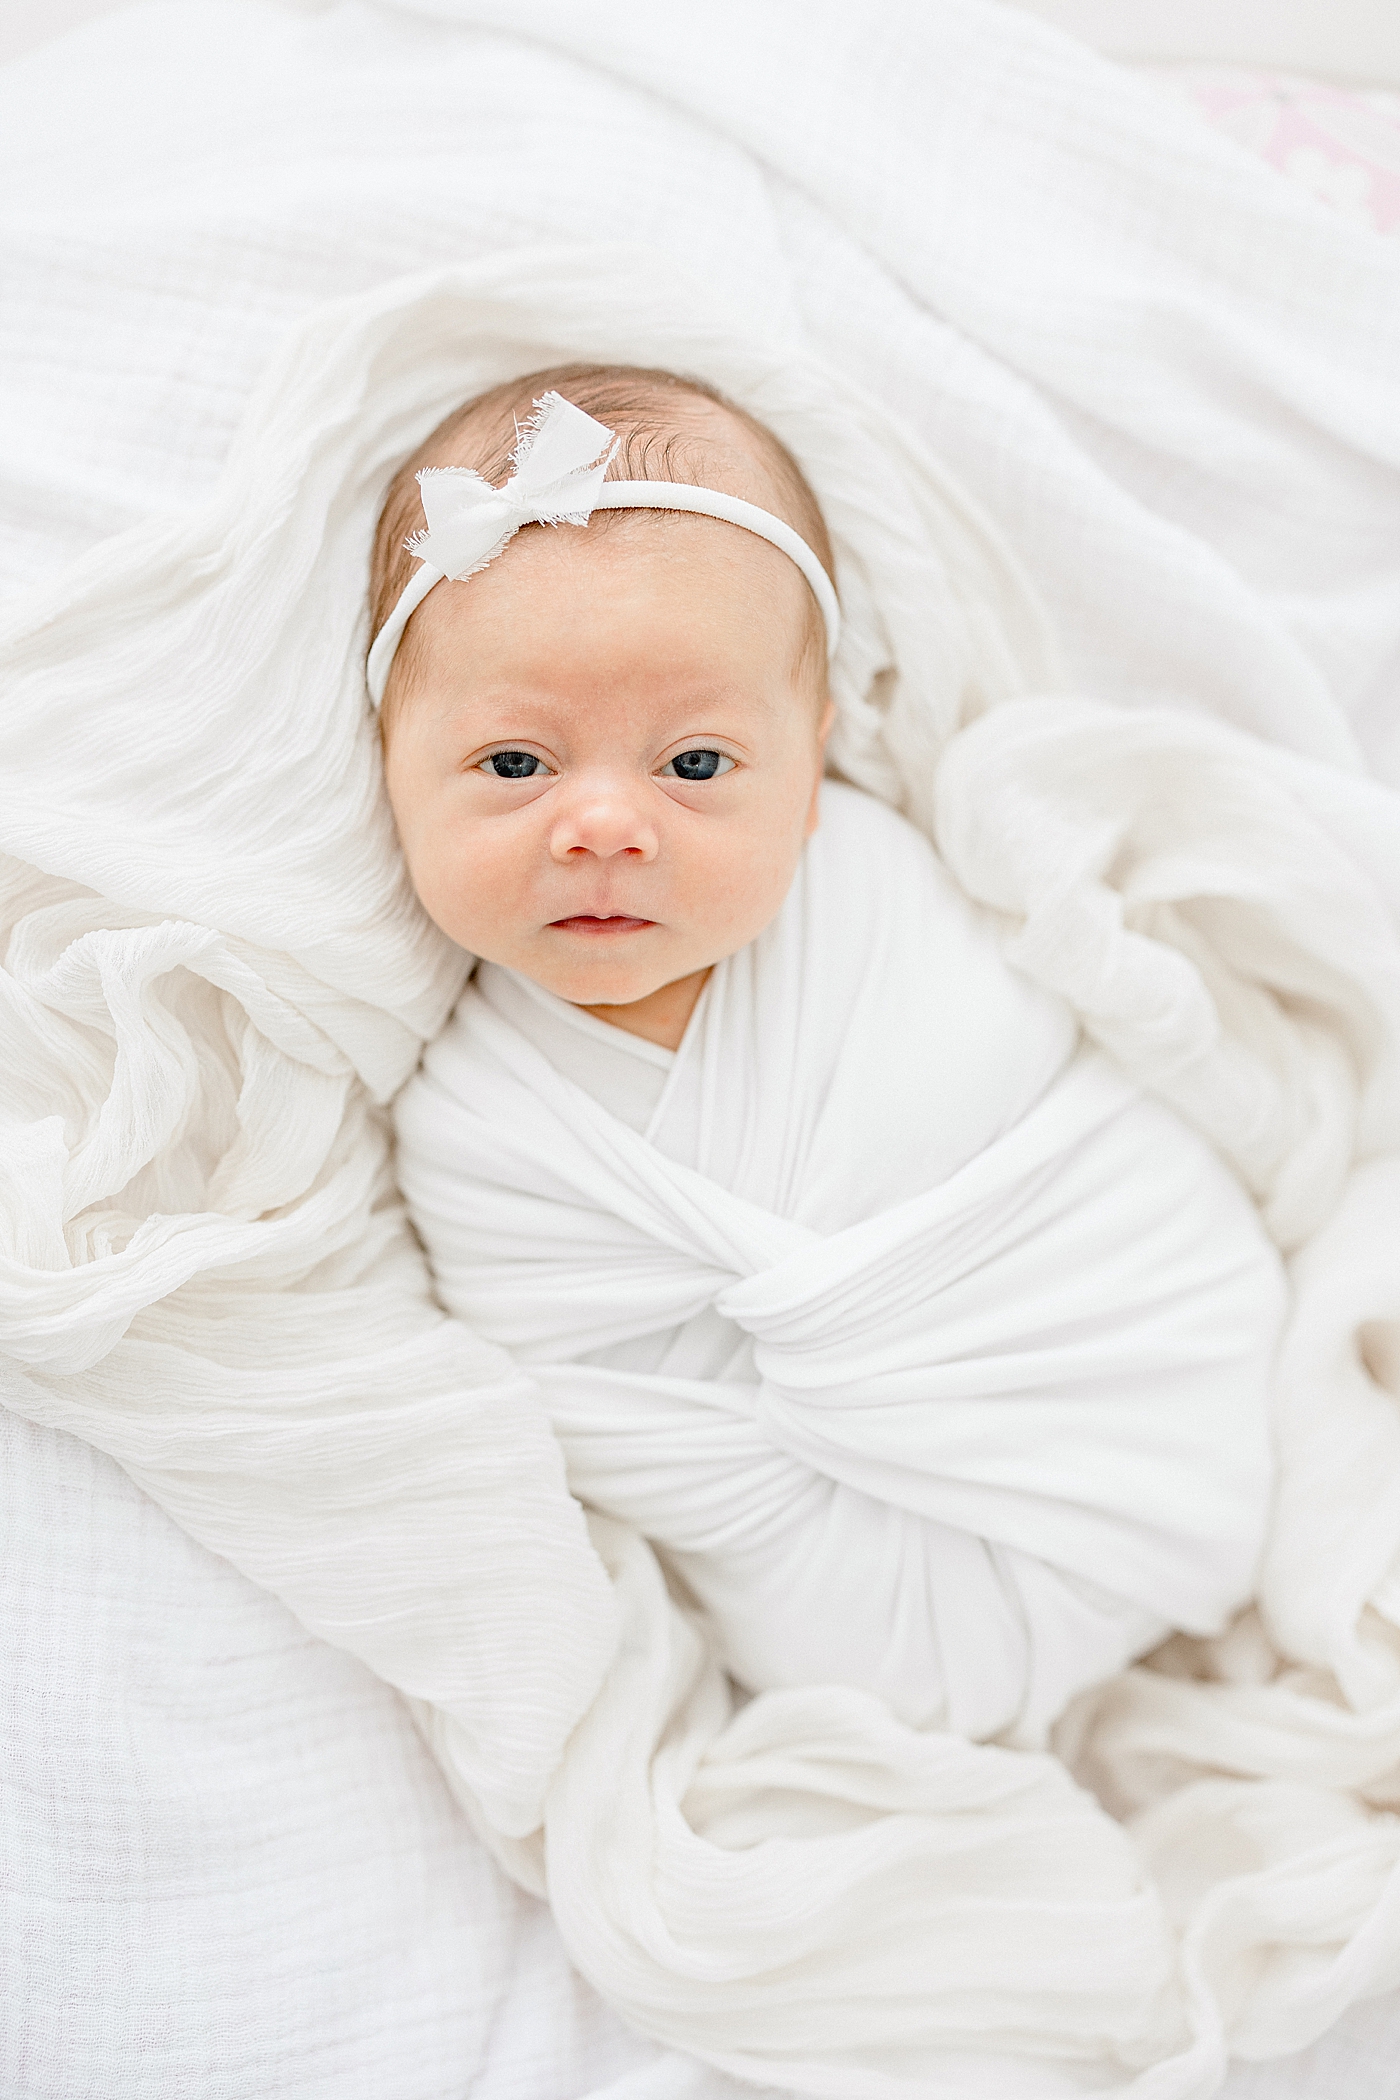 Awake photo of newborn baby girl. Photo by Brittany Elise Photography.